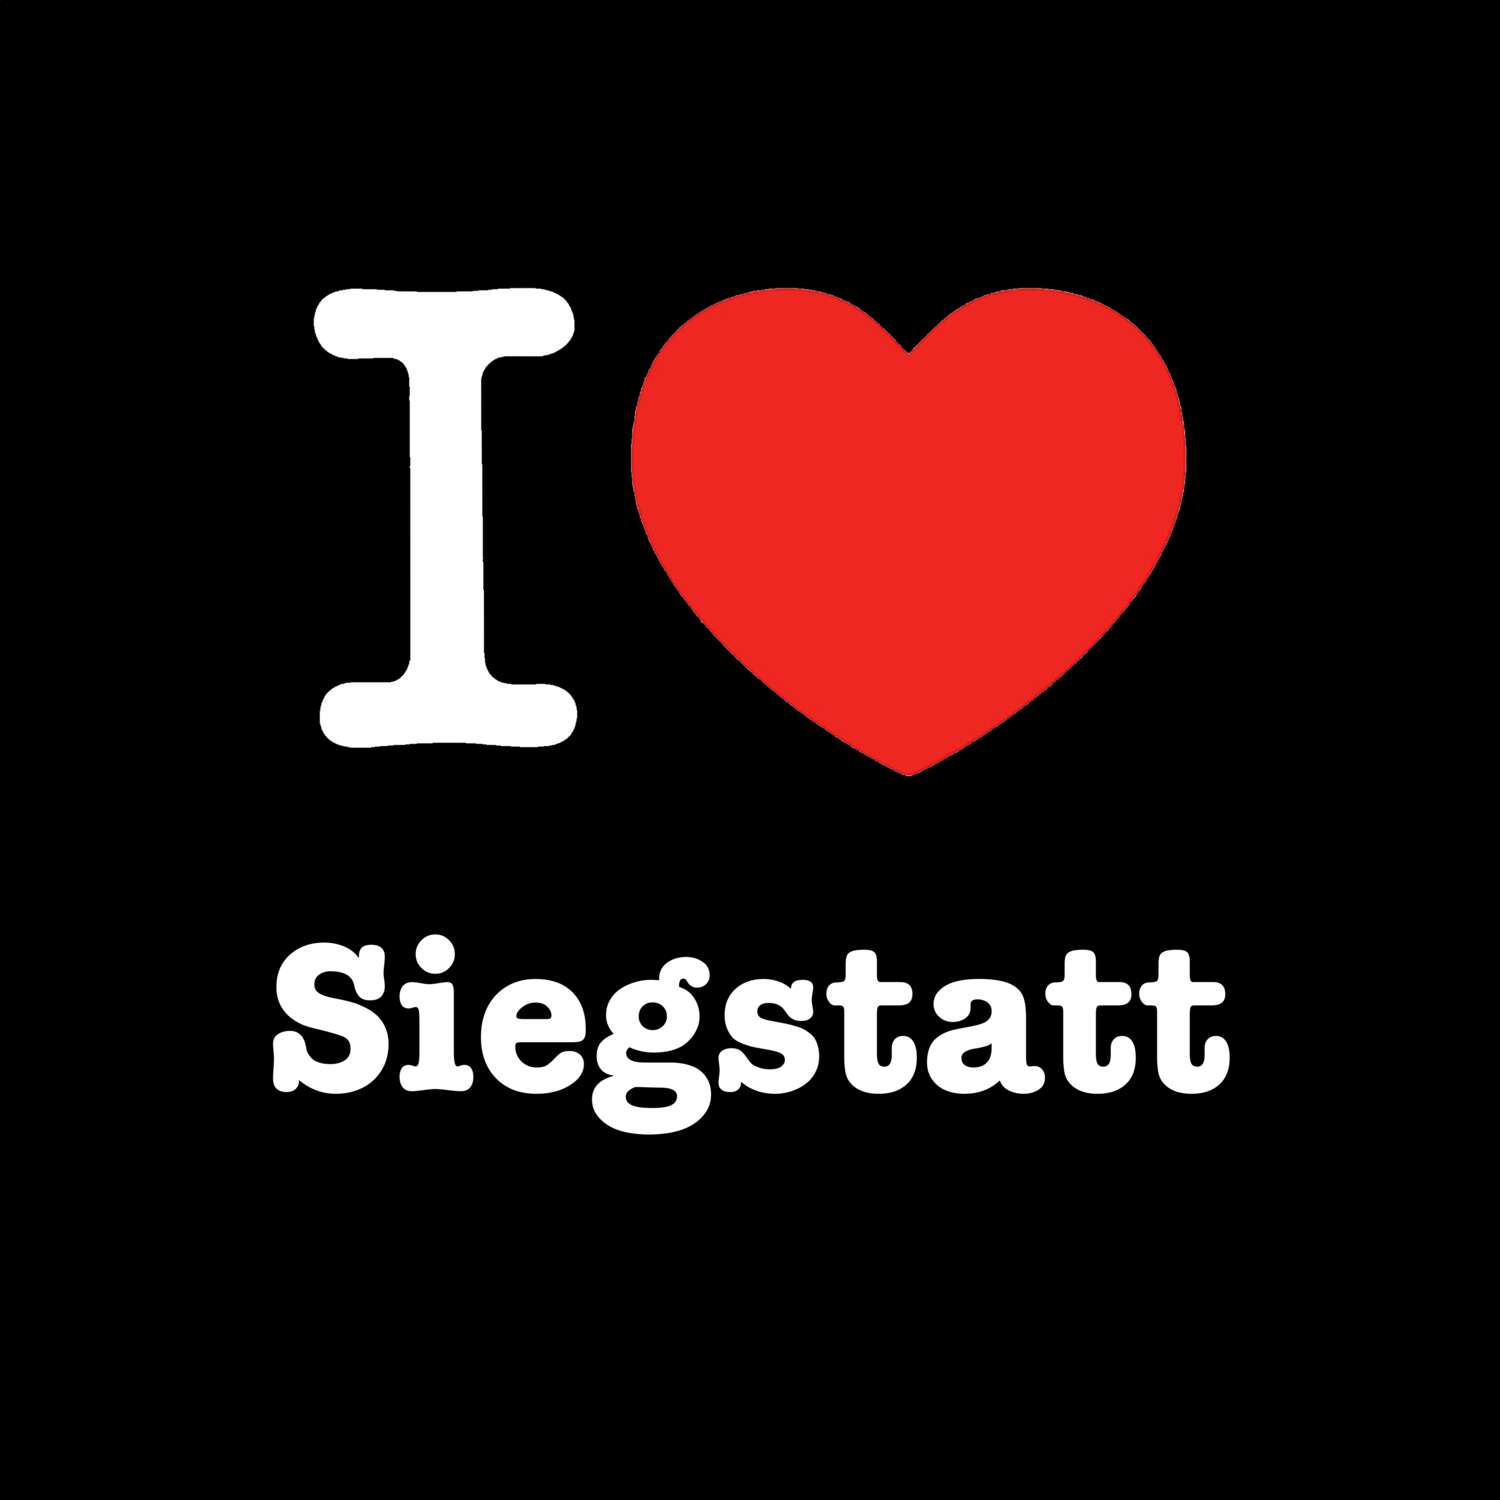 Siegstatt T-Shirt »I love«